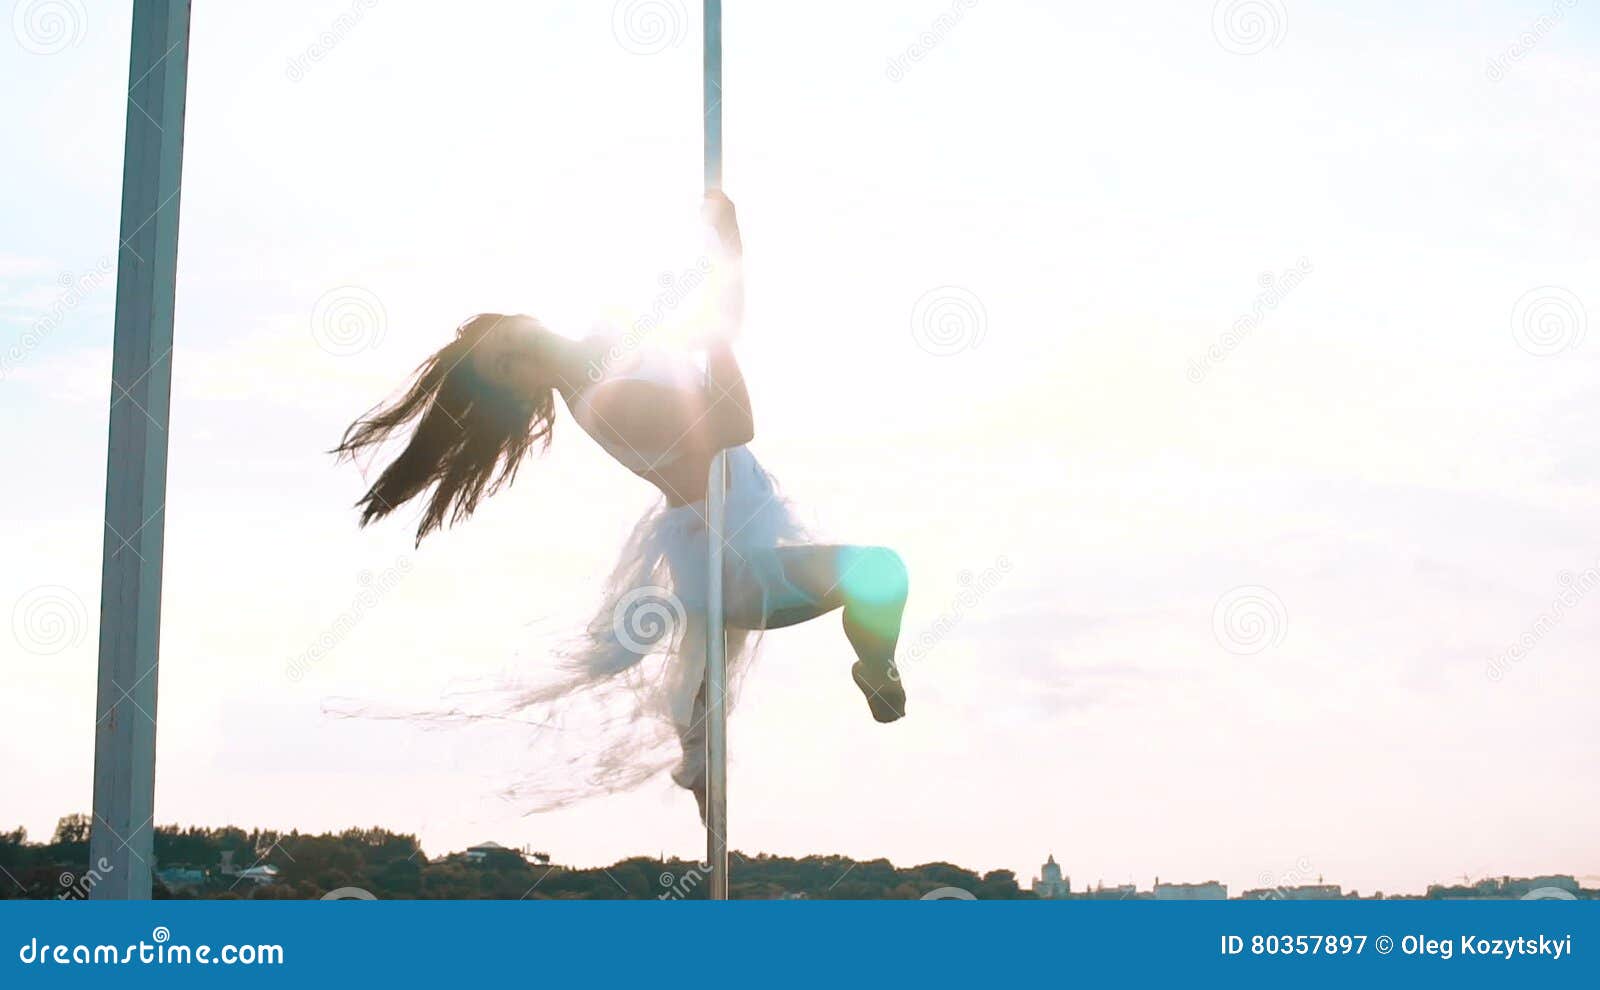 Attractive Girl Poledancer Performs Advanced Pole Dance Tricks at